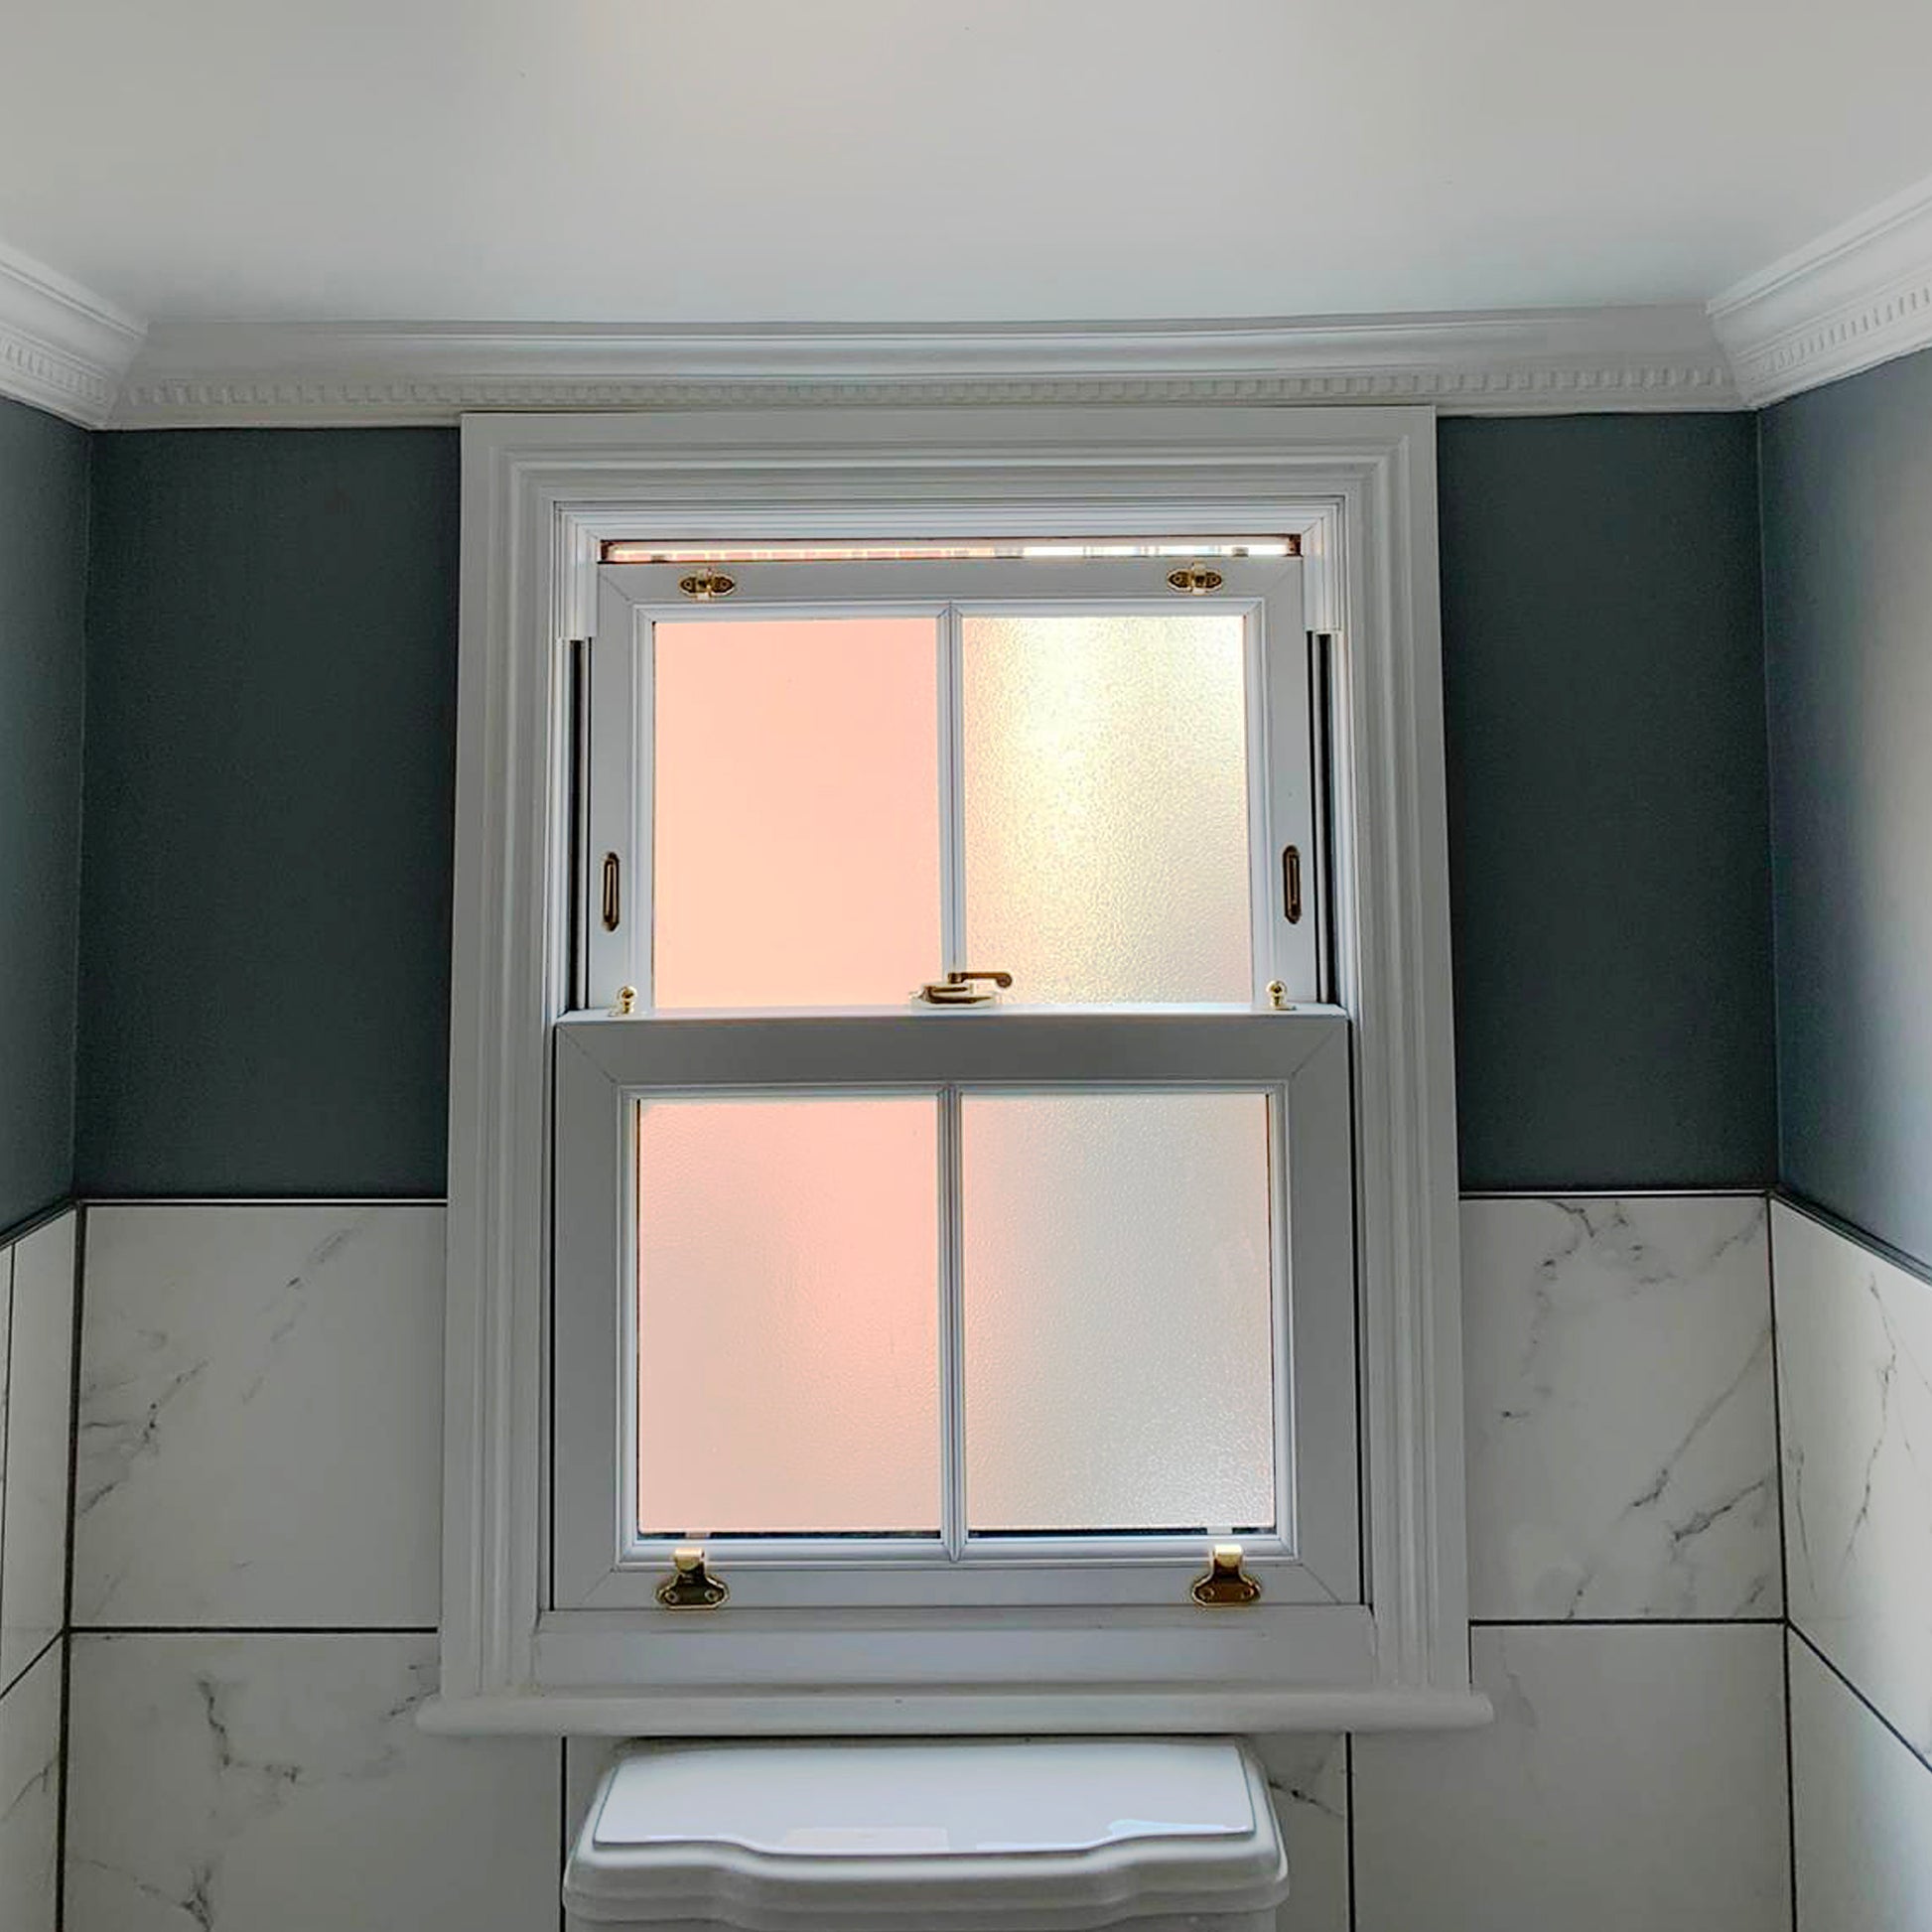 Dentil cornice in bathroom above window